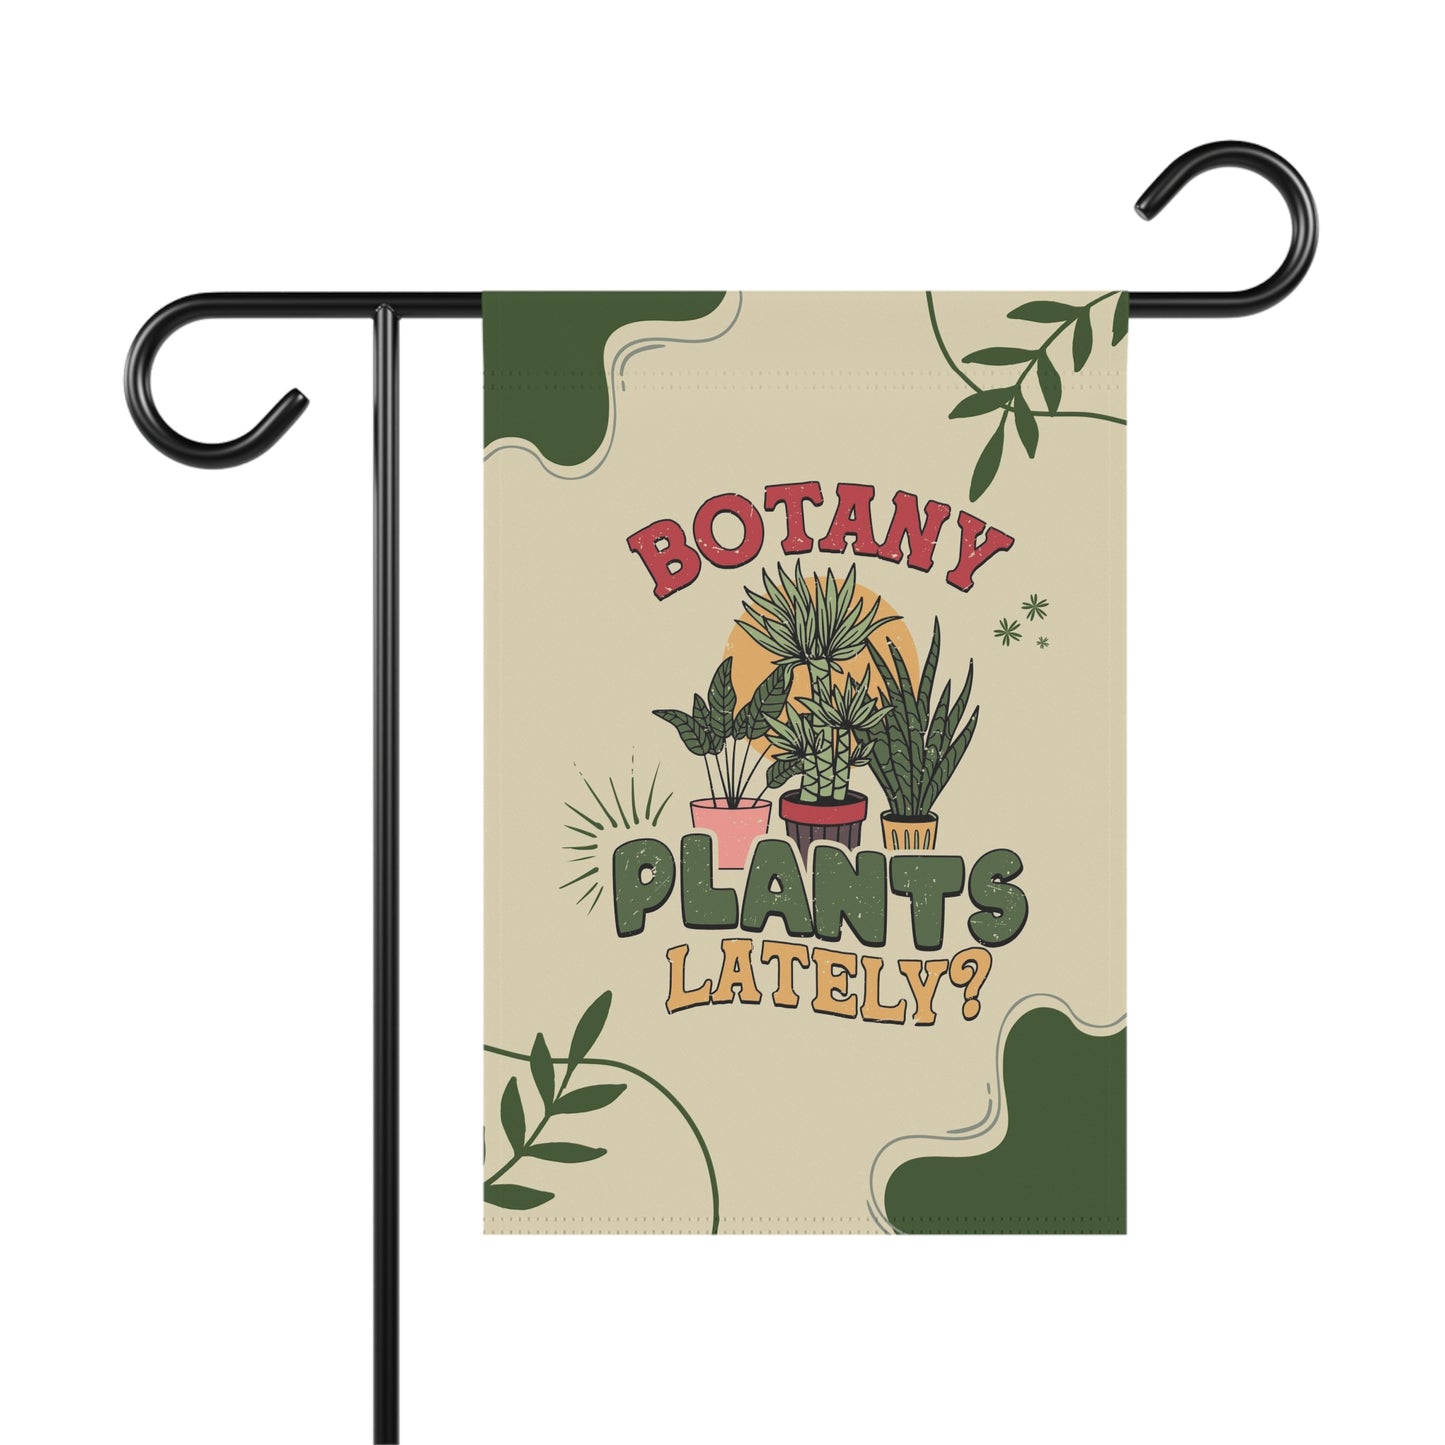 Botany plants lately yard flag for plant lady or gardener. Funny garden flag for her or him. Christmas gift for plant lover